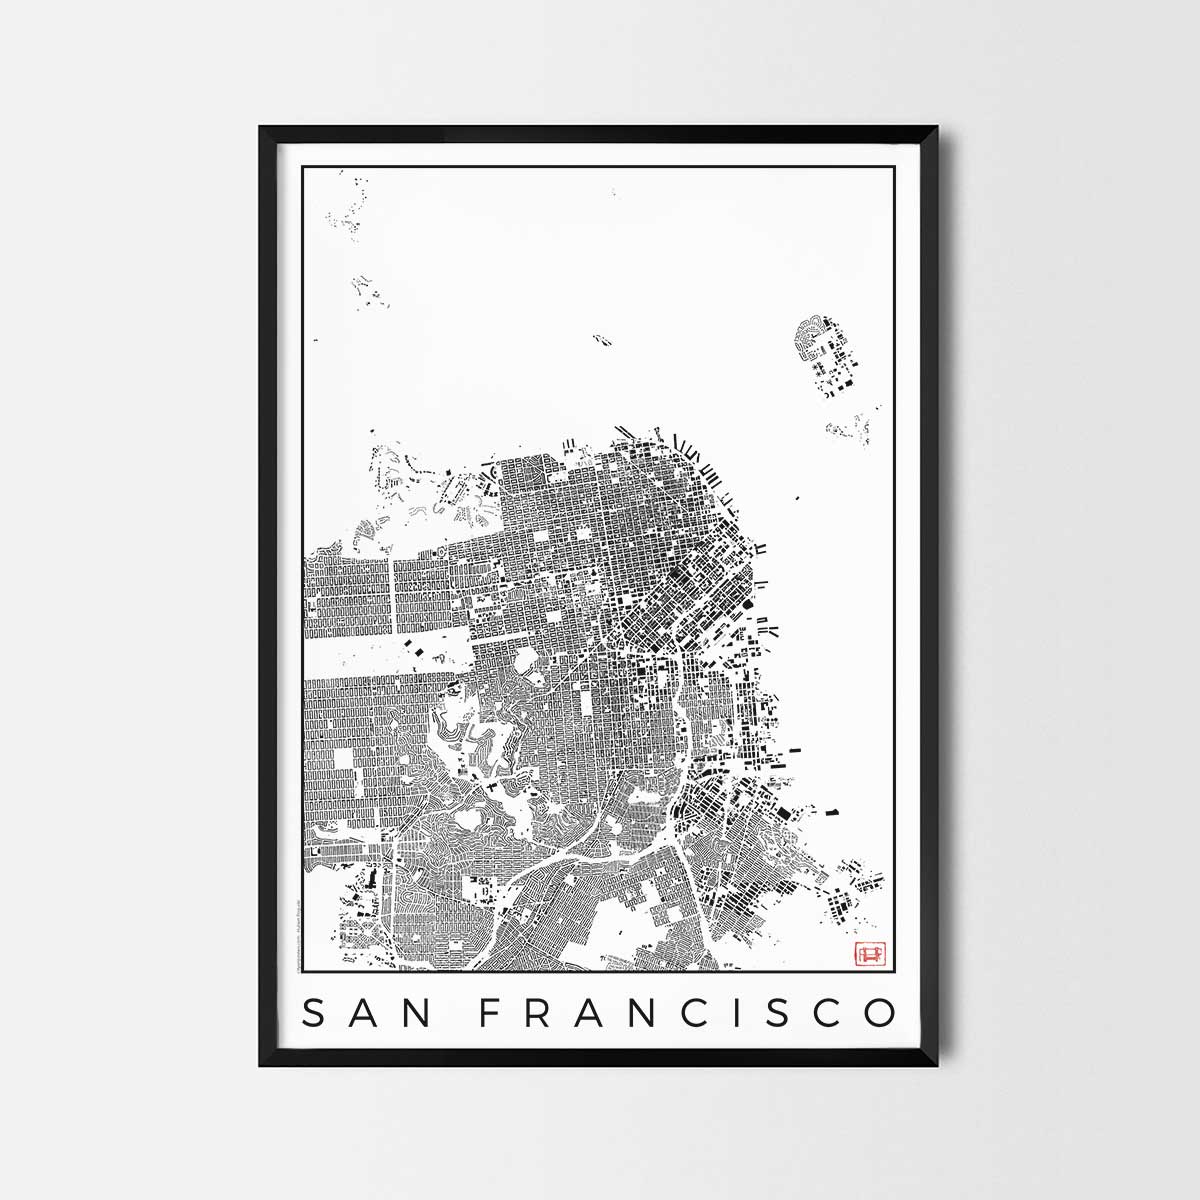 San Francisco Map Poster schwarzplan Urban plan city map art posters map posters city art prints city posters